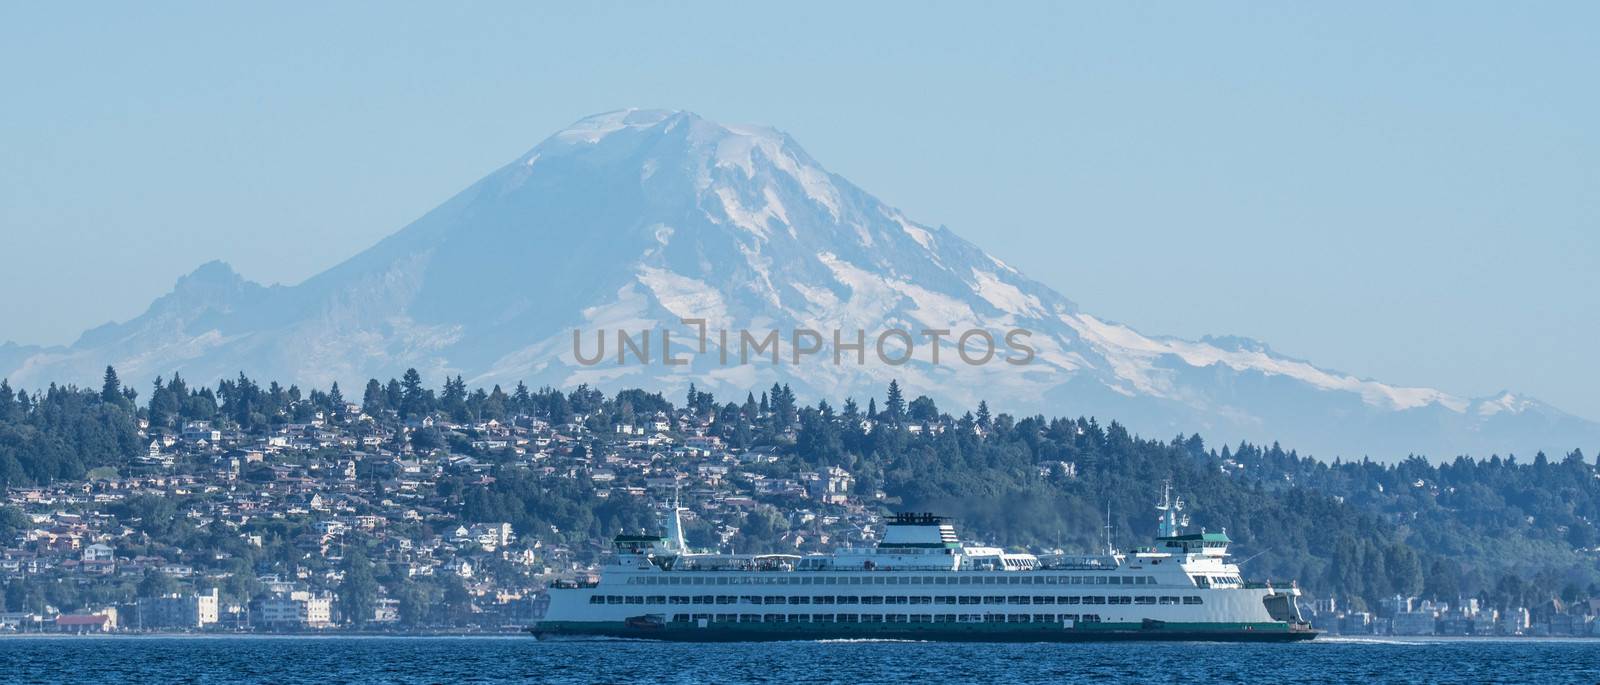 Washington State Ferry, Wenatchee, in front of West Seattle and Mount Rainier.